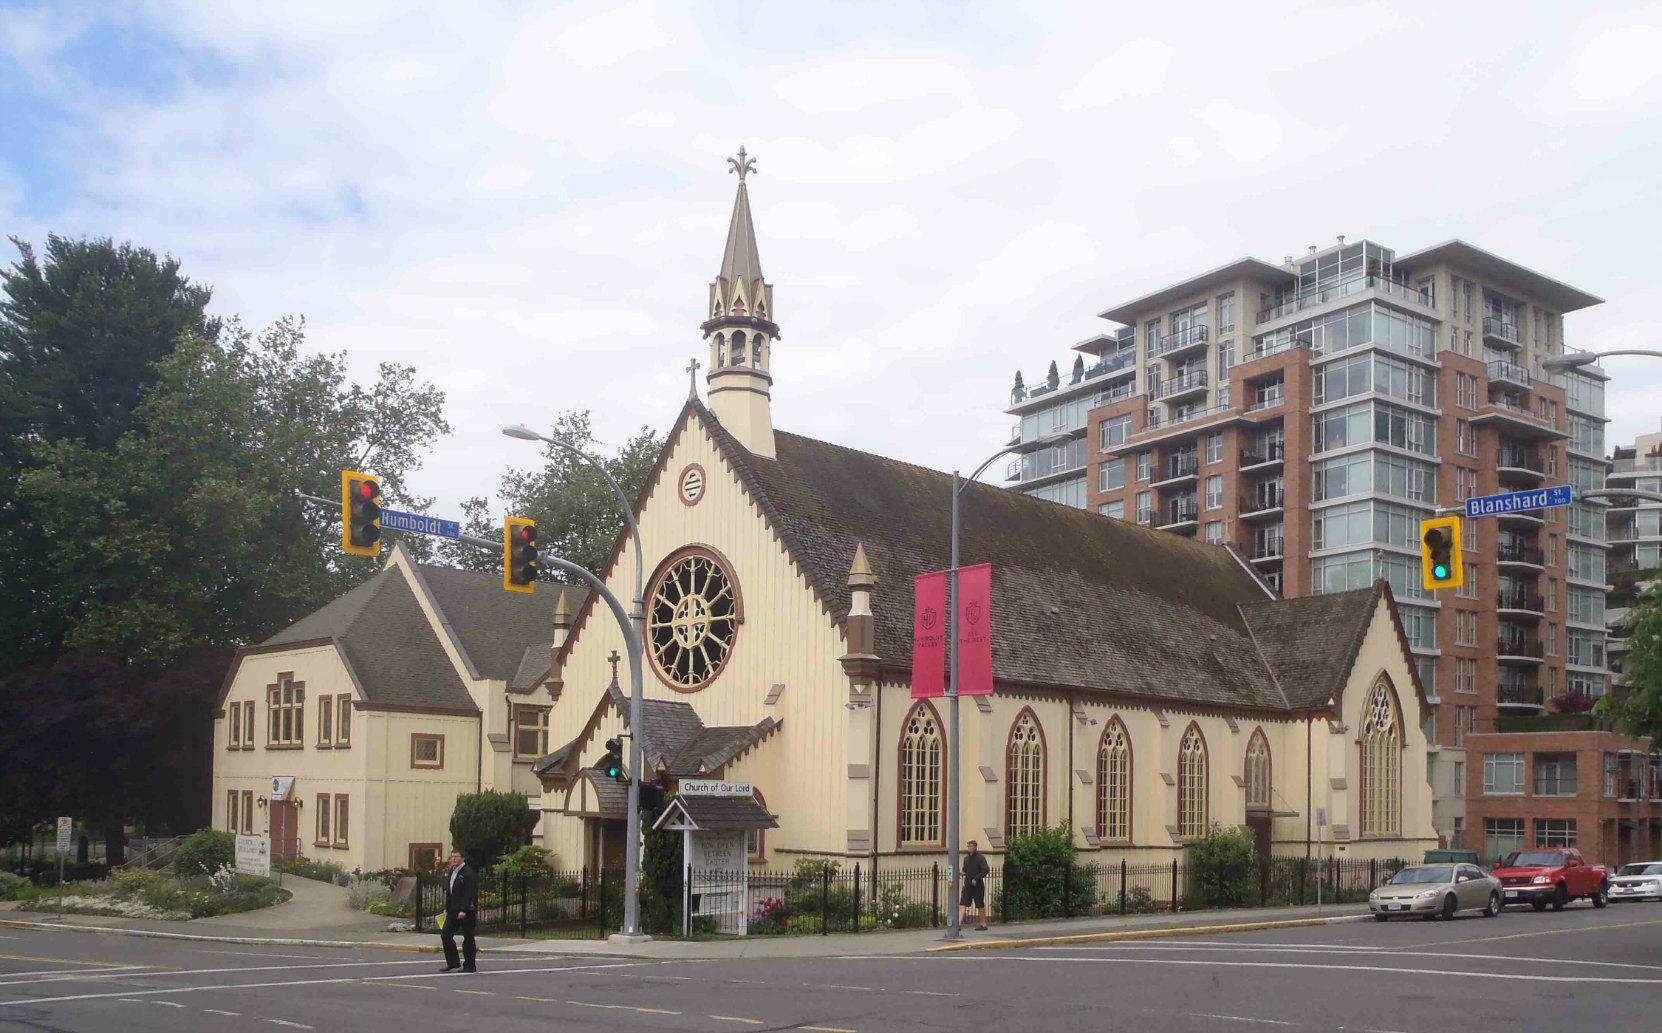 Reformed Episcopal Church, 626 Blanshard Street. Built in 1875-76 by architect John Teague for Rev. Edward Cridge.